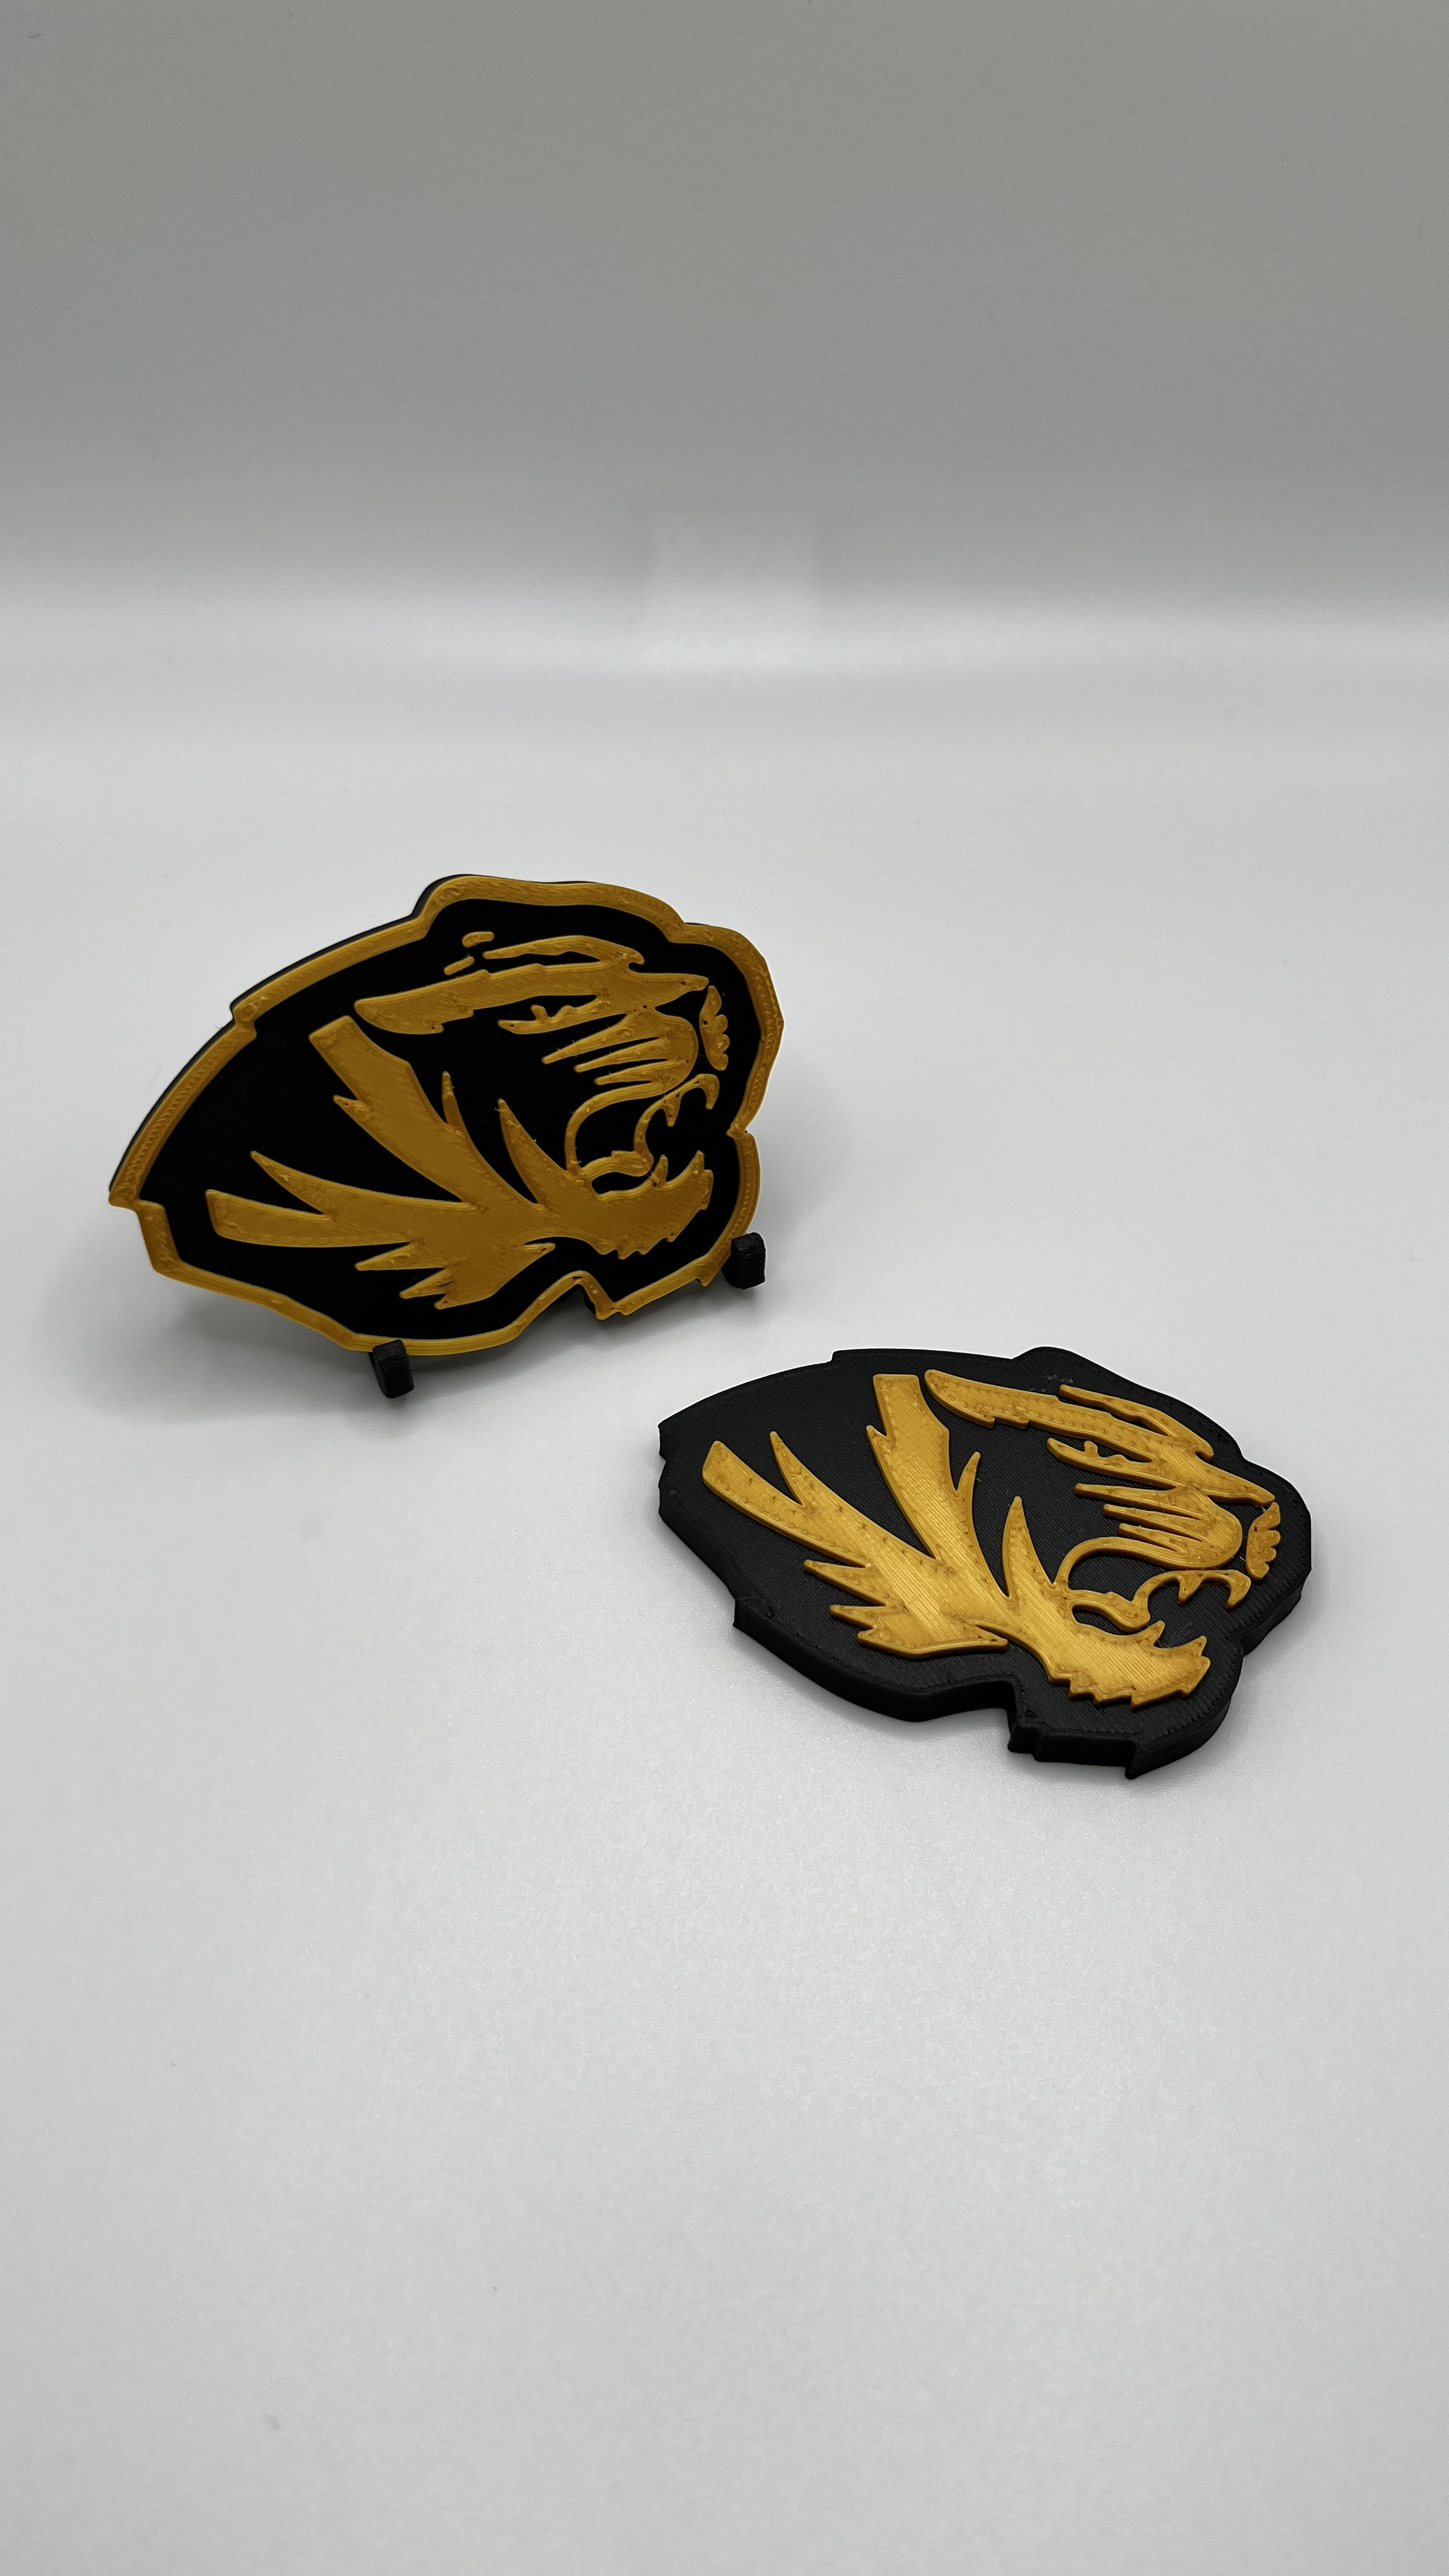 University of Missouri/Mizzou Tiger Magnet